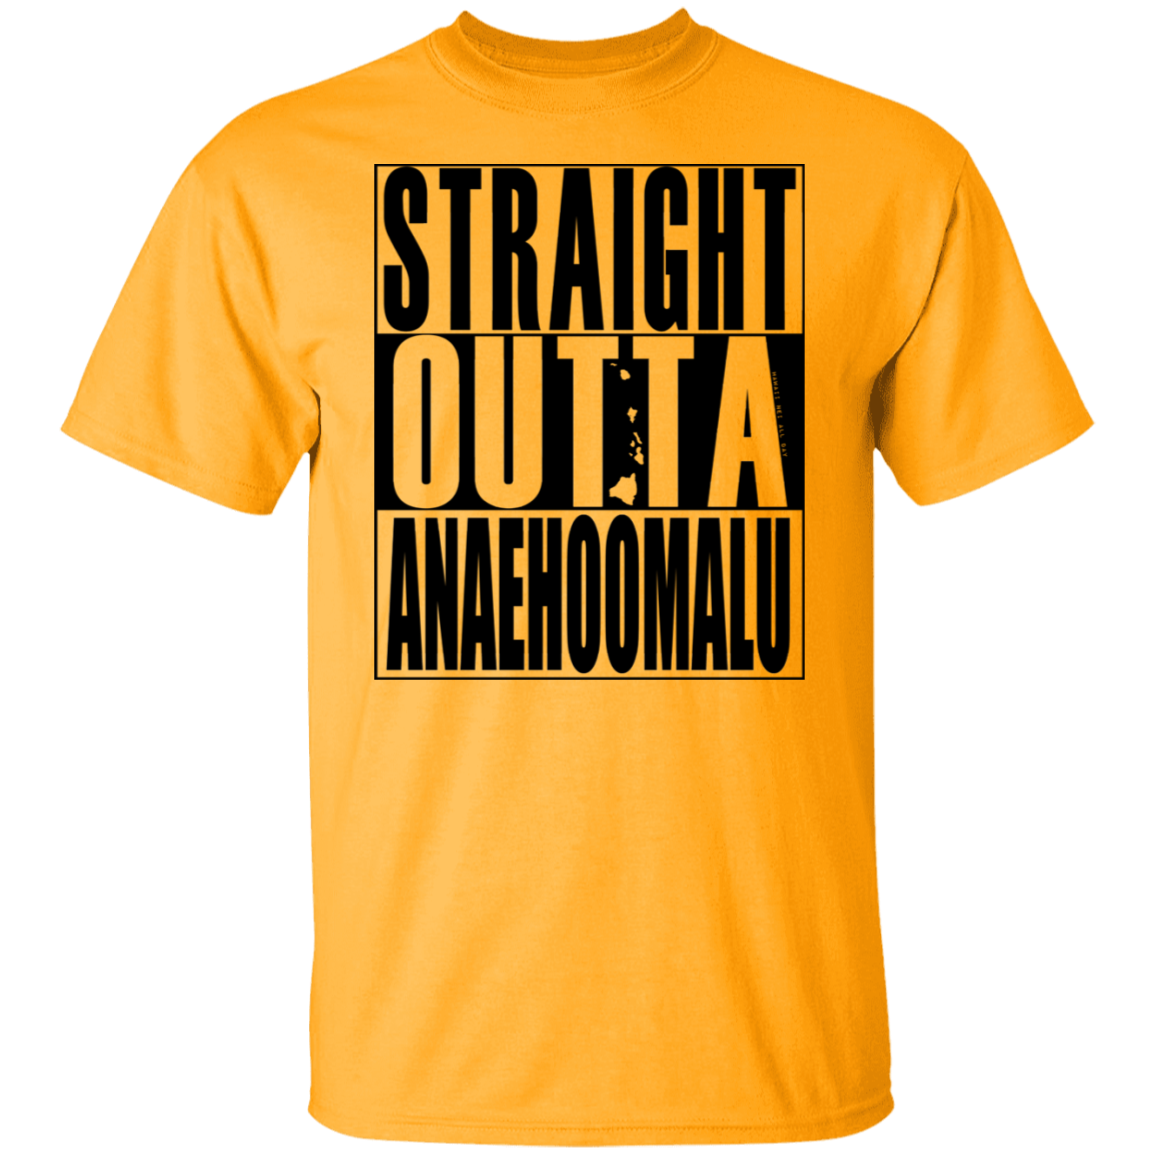 Straight Outta Anaehoomalu(black ink) T-Shirt